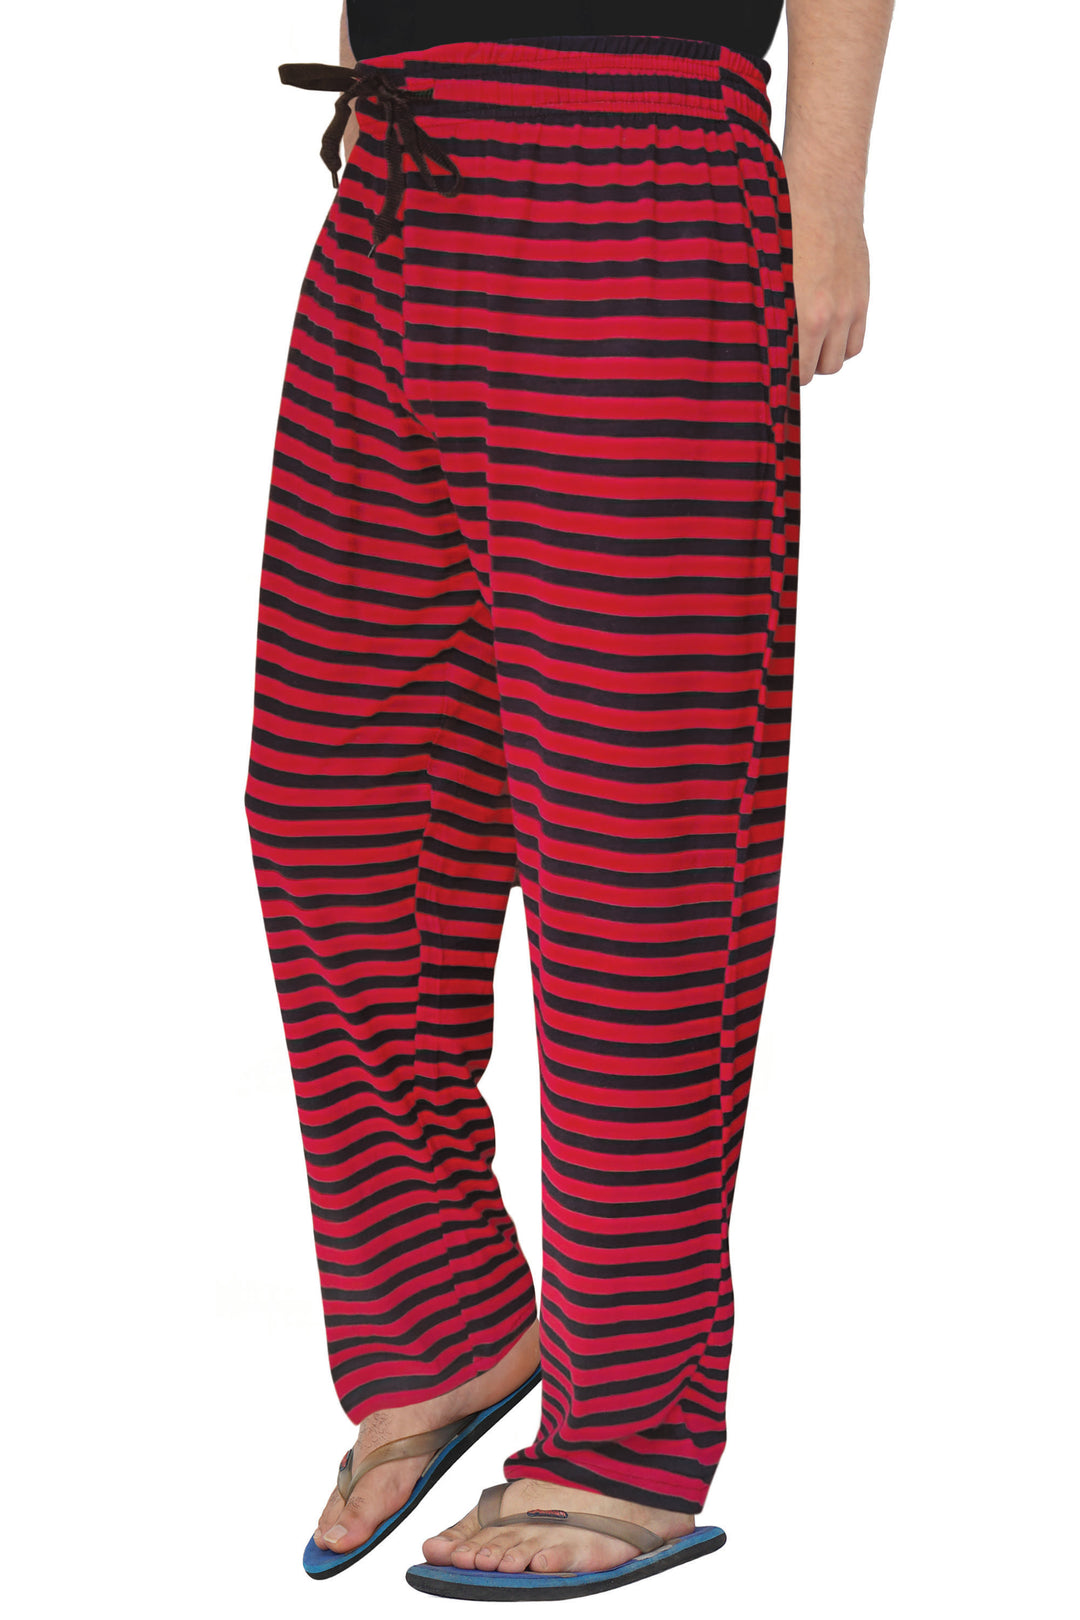 Black and Red Check Pyjama